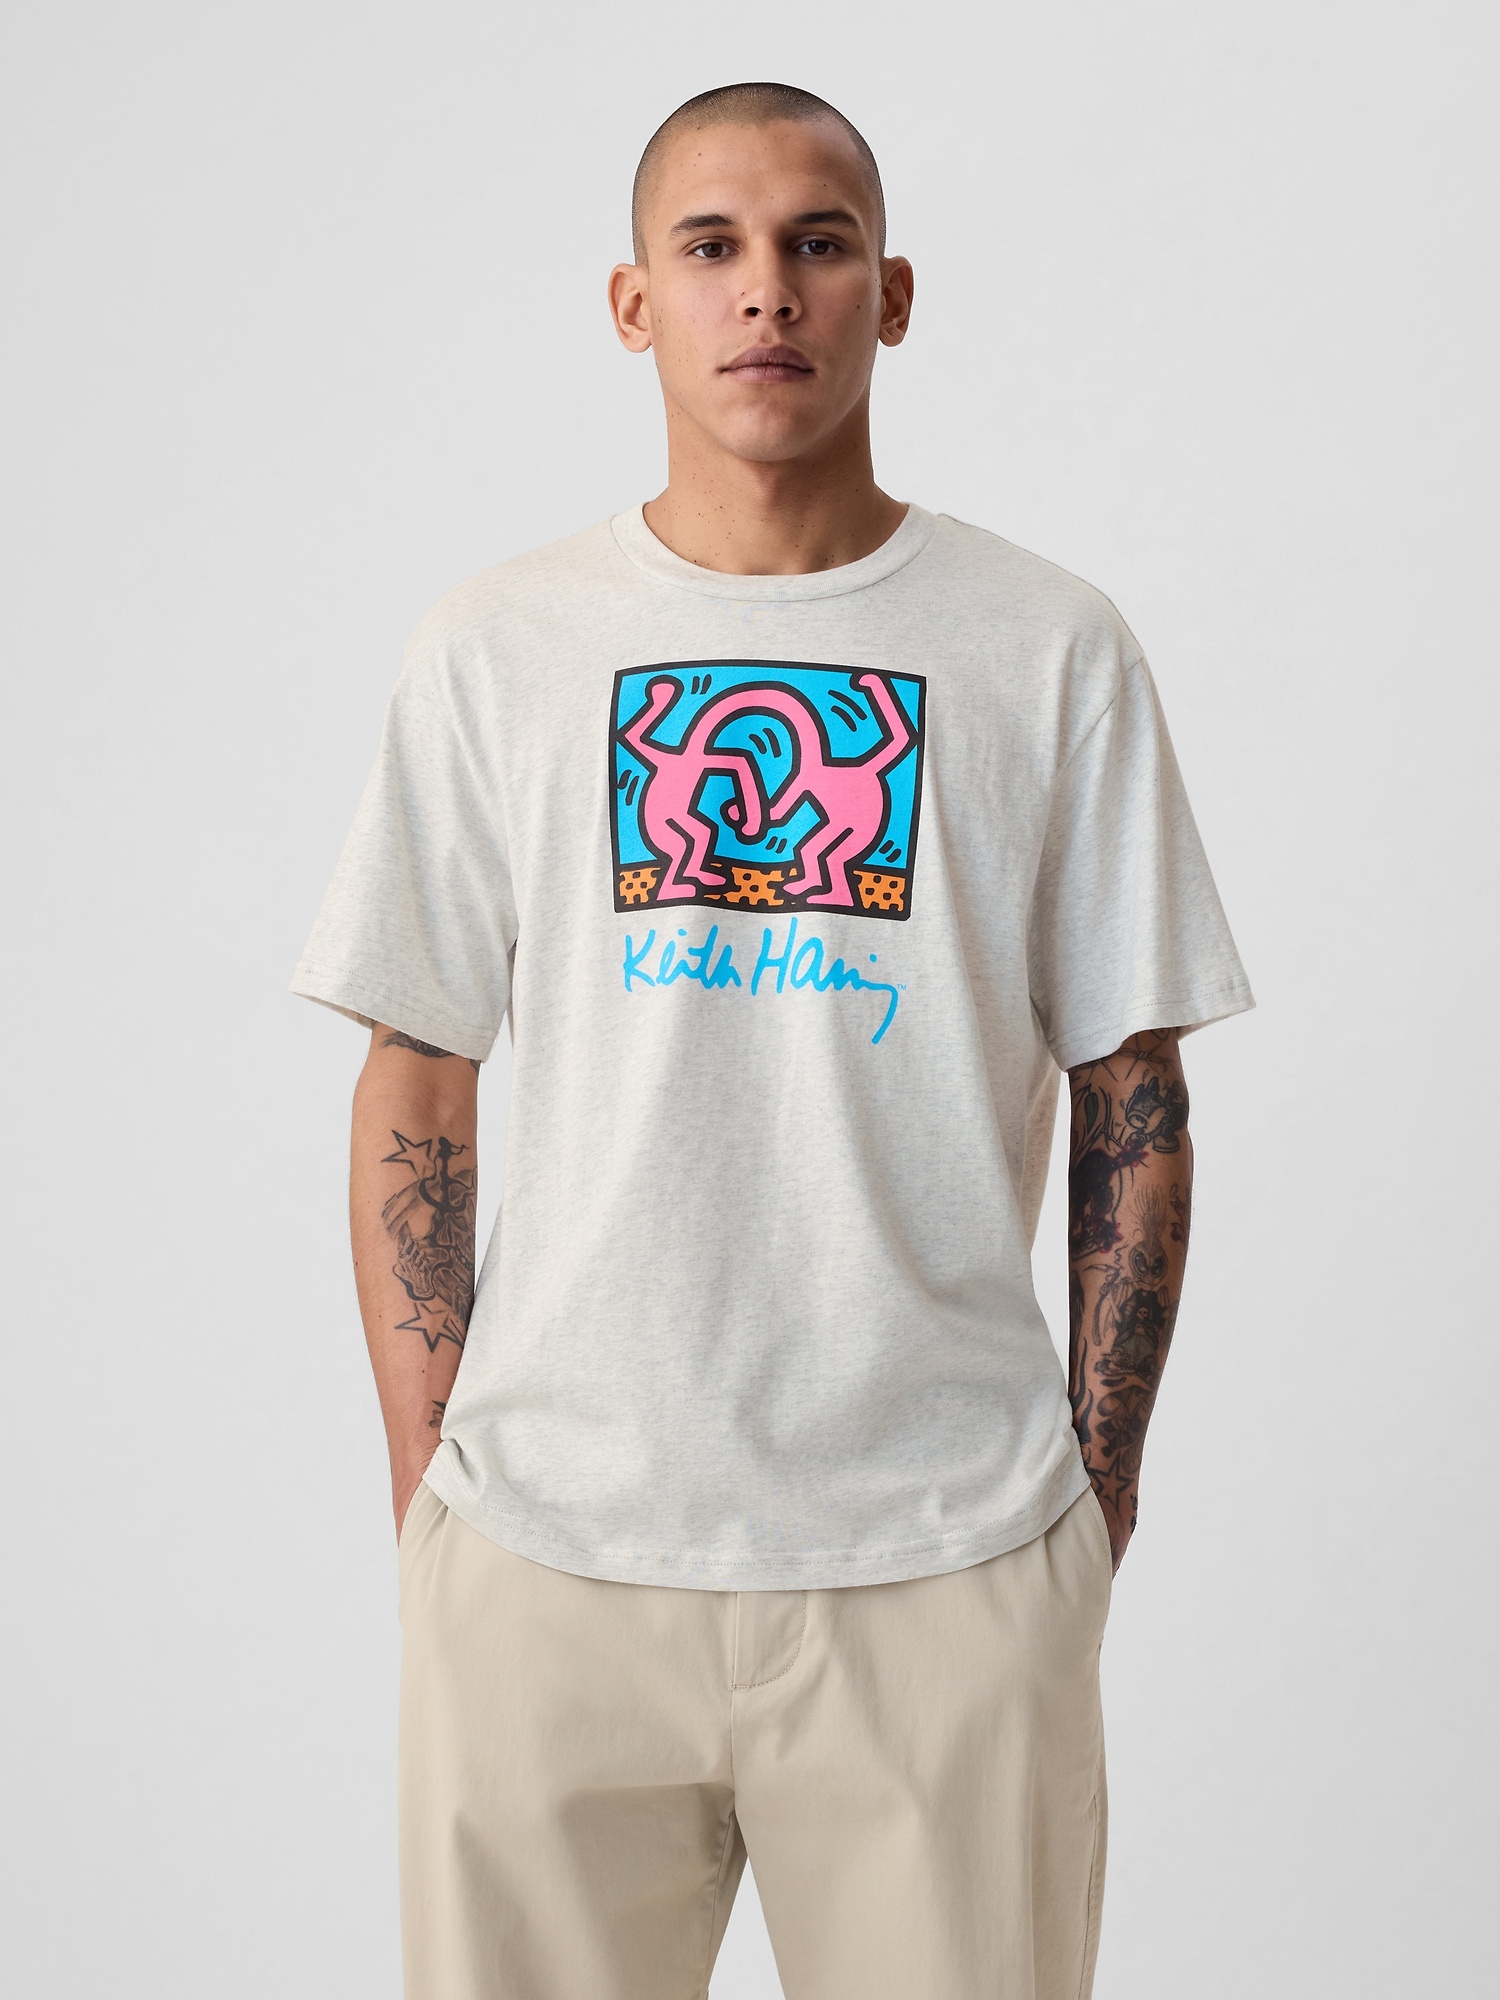 Keith Haring Graphic T-Shirt